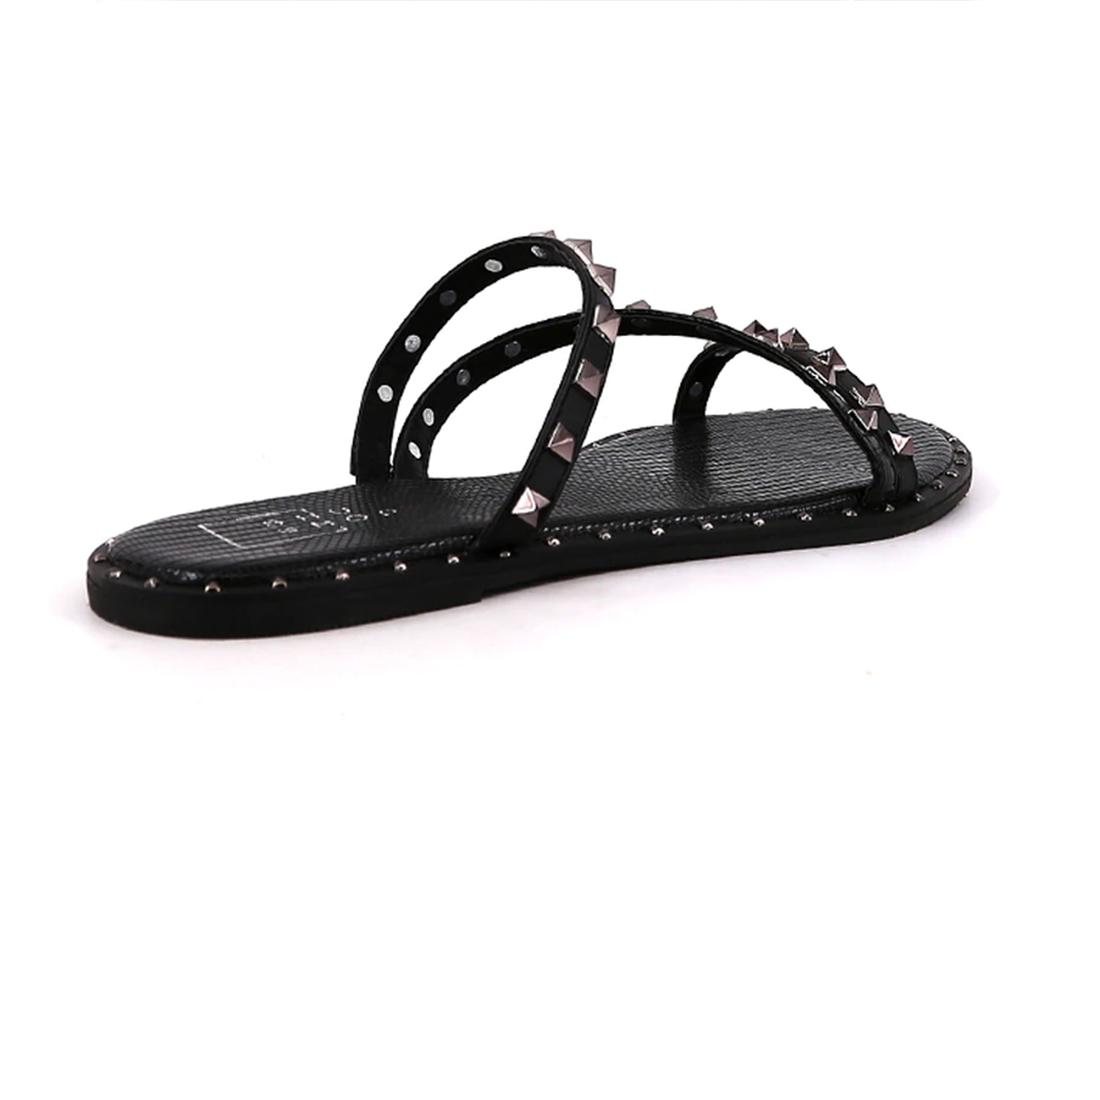 shu shop belara sandal in black 85914